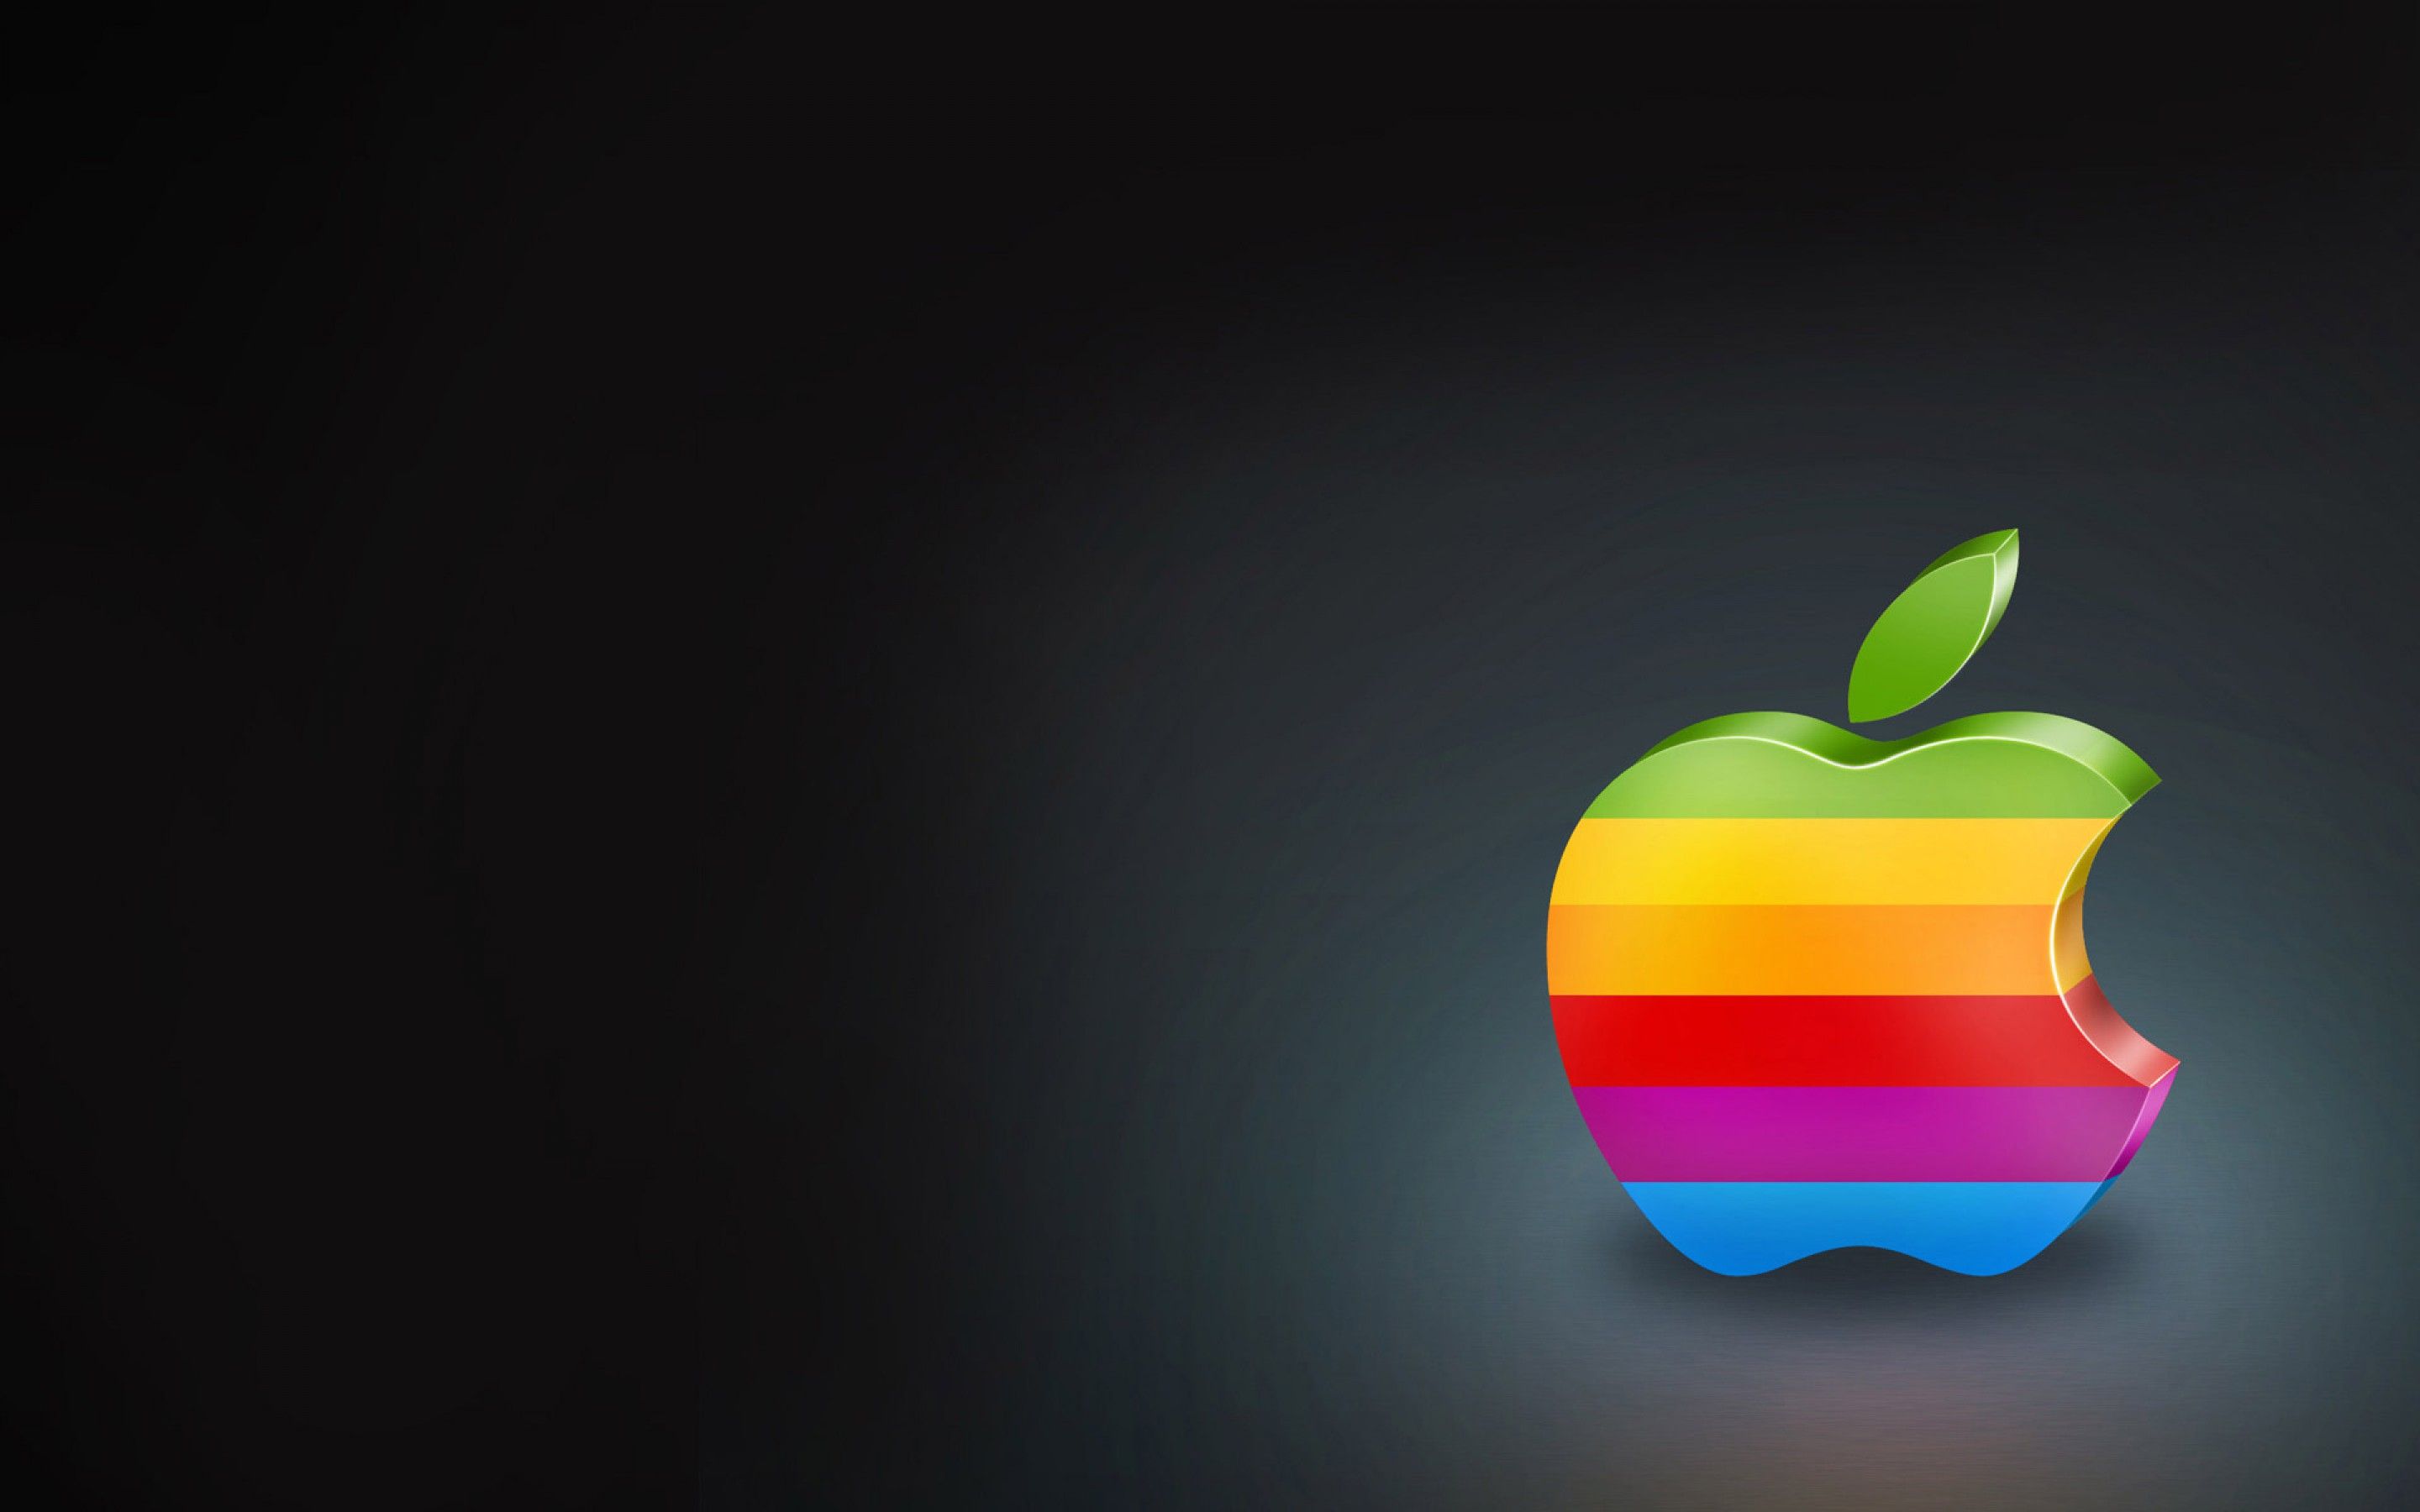 Обои на айфон яблоко. Логотип Apple. Яблочко Эппл. Яблоко айфон. Фон Apple.